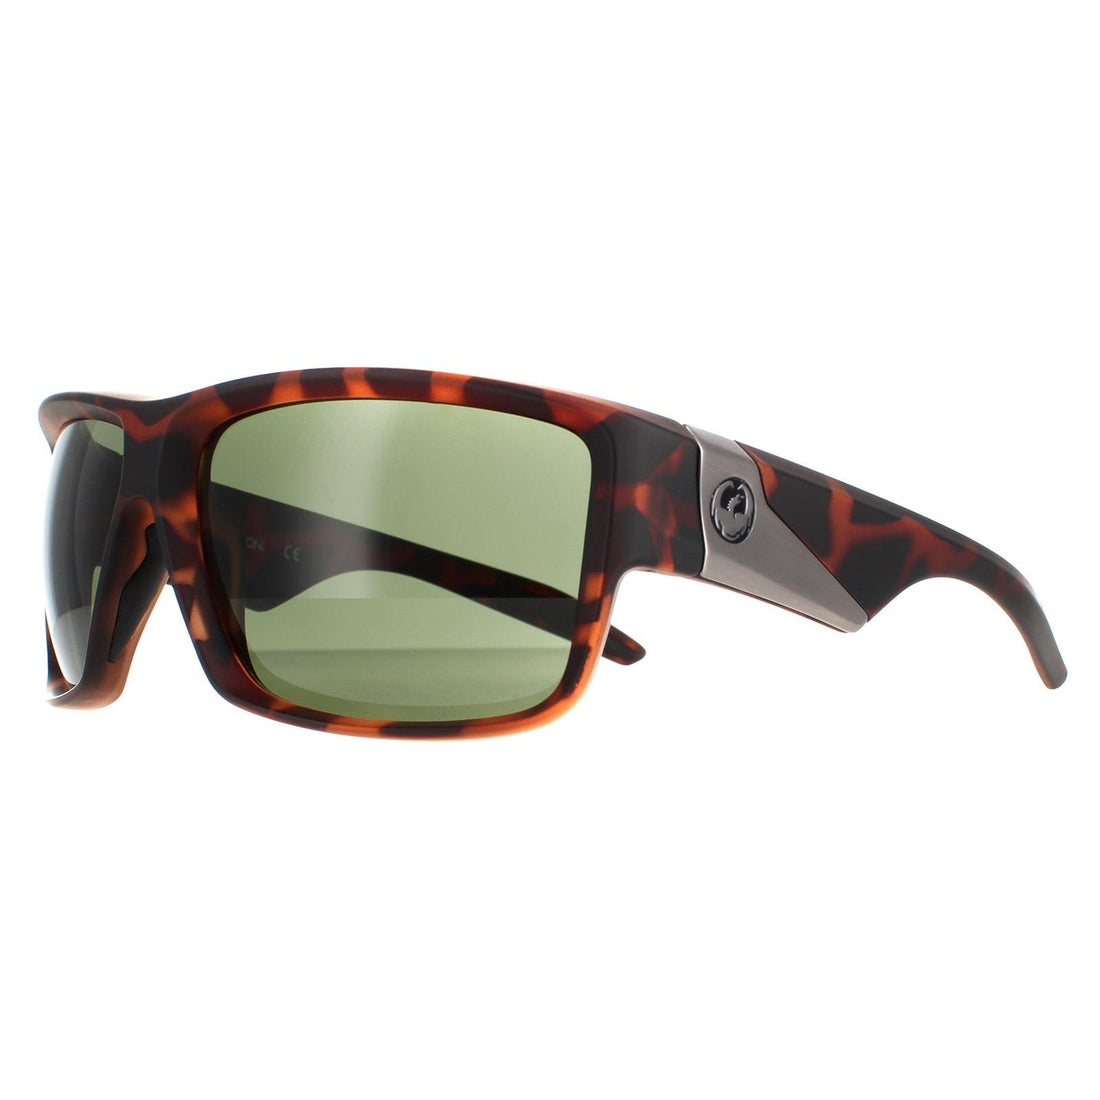 Dragon Sunglasses Deadlock 41898-246 Matte Tortoise Lumalens G15 Green